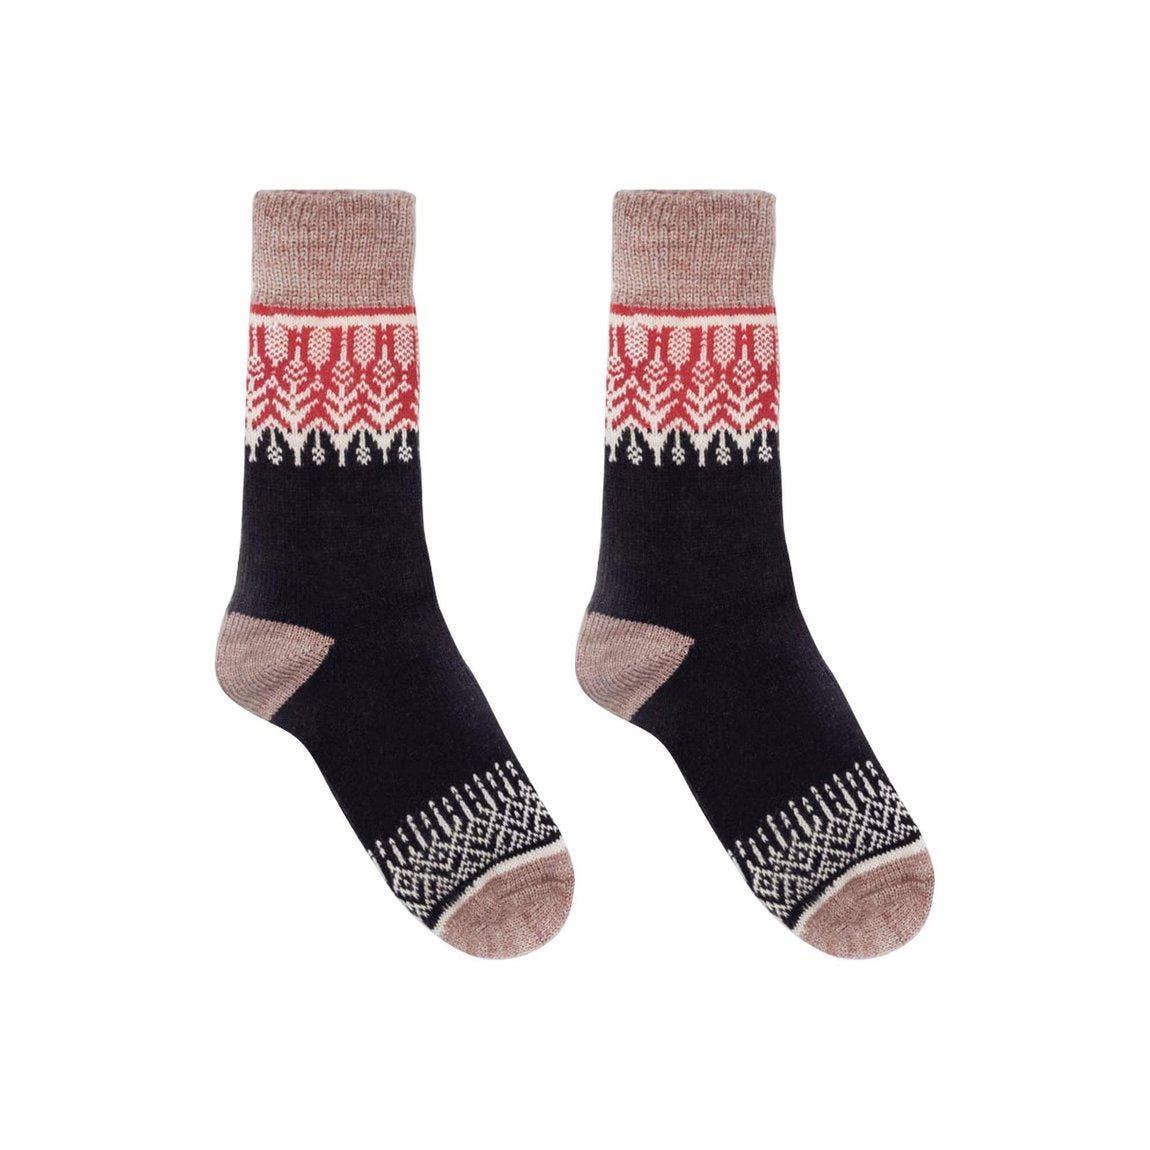 Nordic Socks Merino Wool in PERFORM™ (Yule - Sunset) - Unise: Large